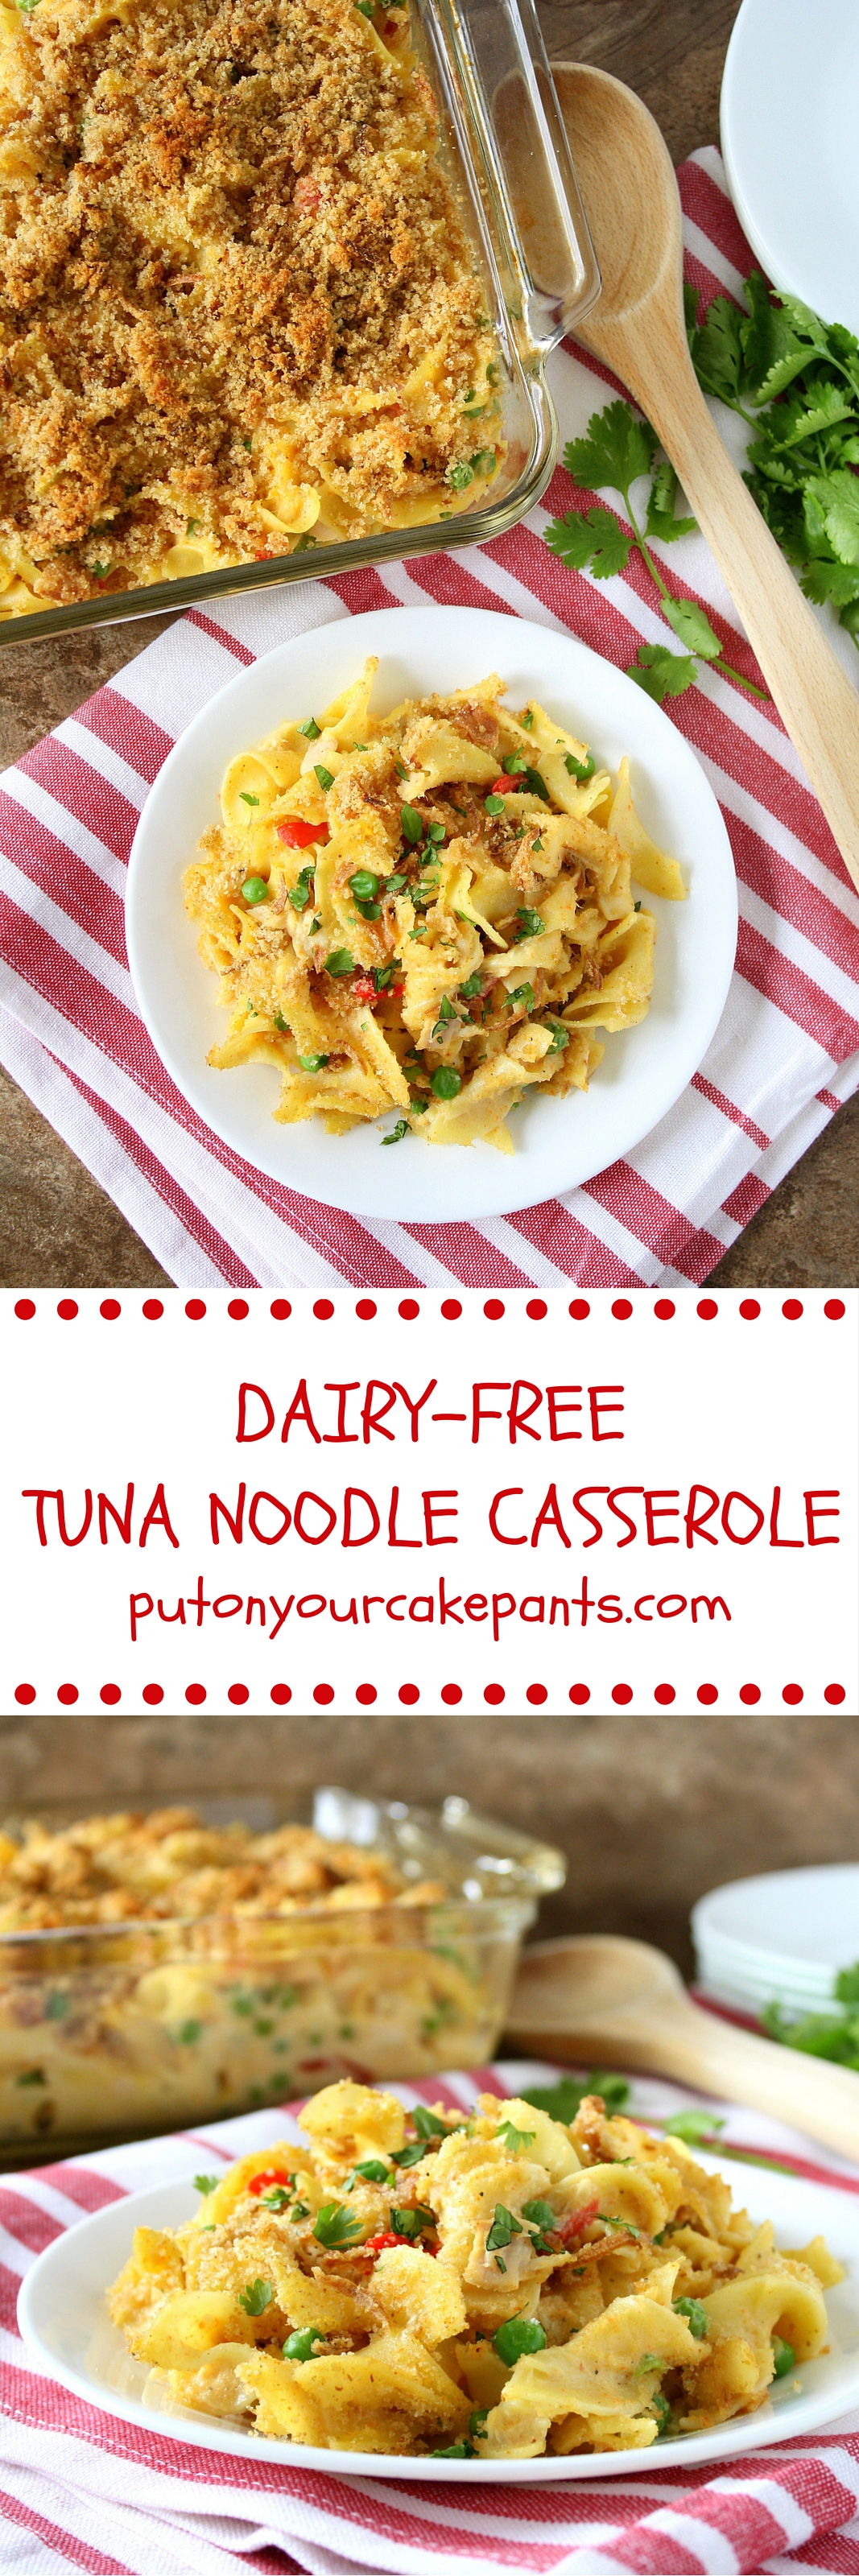 dairy-free tuna noodle casserole